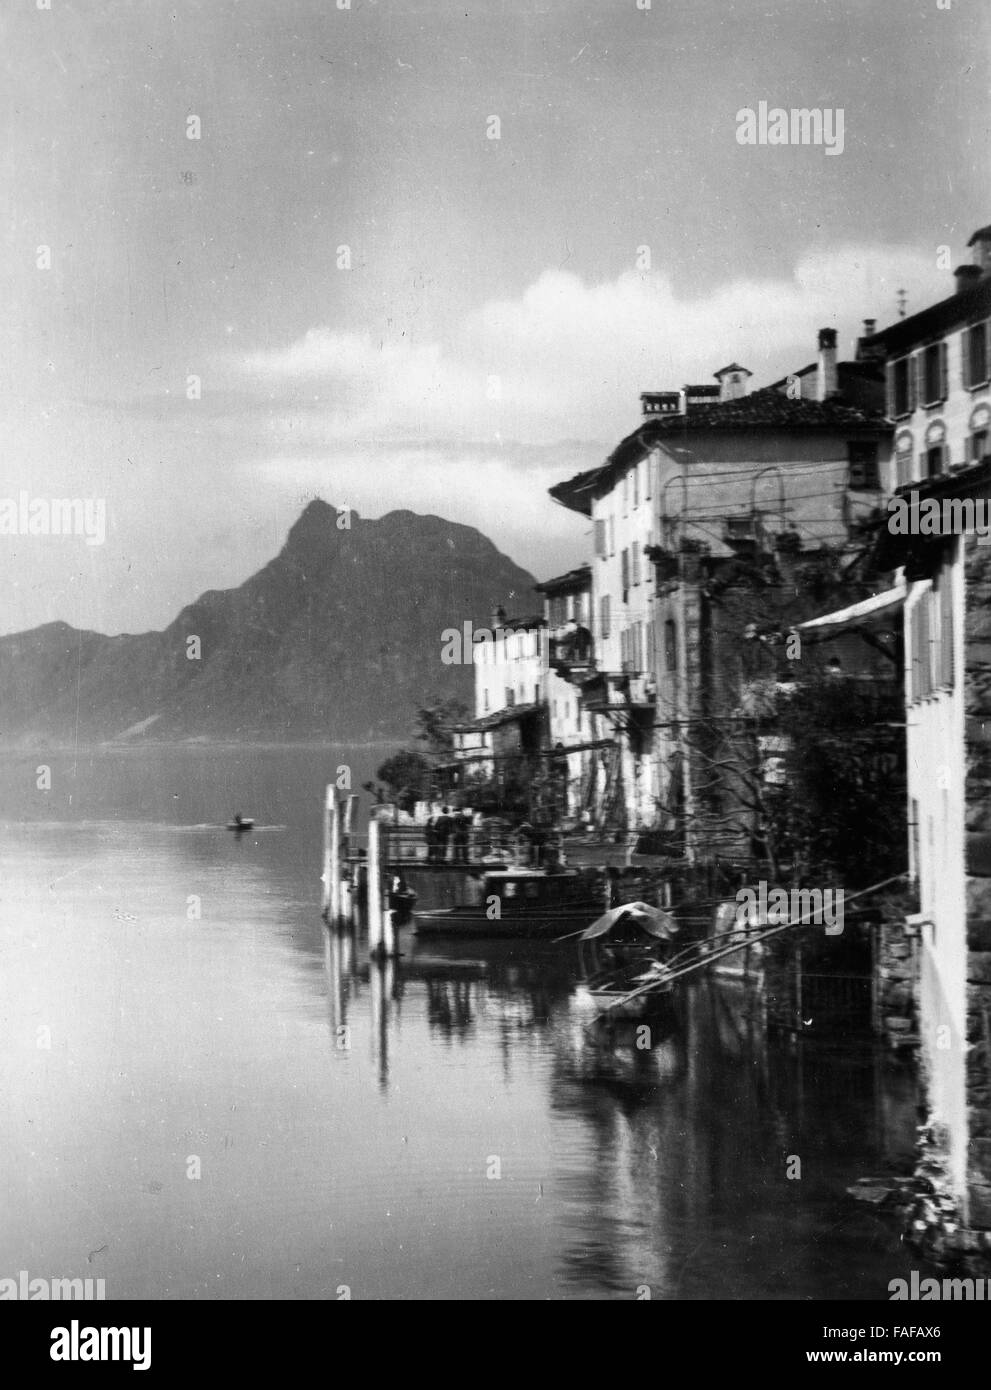 Gandria am Luganer See, Schweiz 1930er Jahre. Gandria at Lake Lugano, Switzerland 1930s. Stock Photo